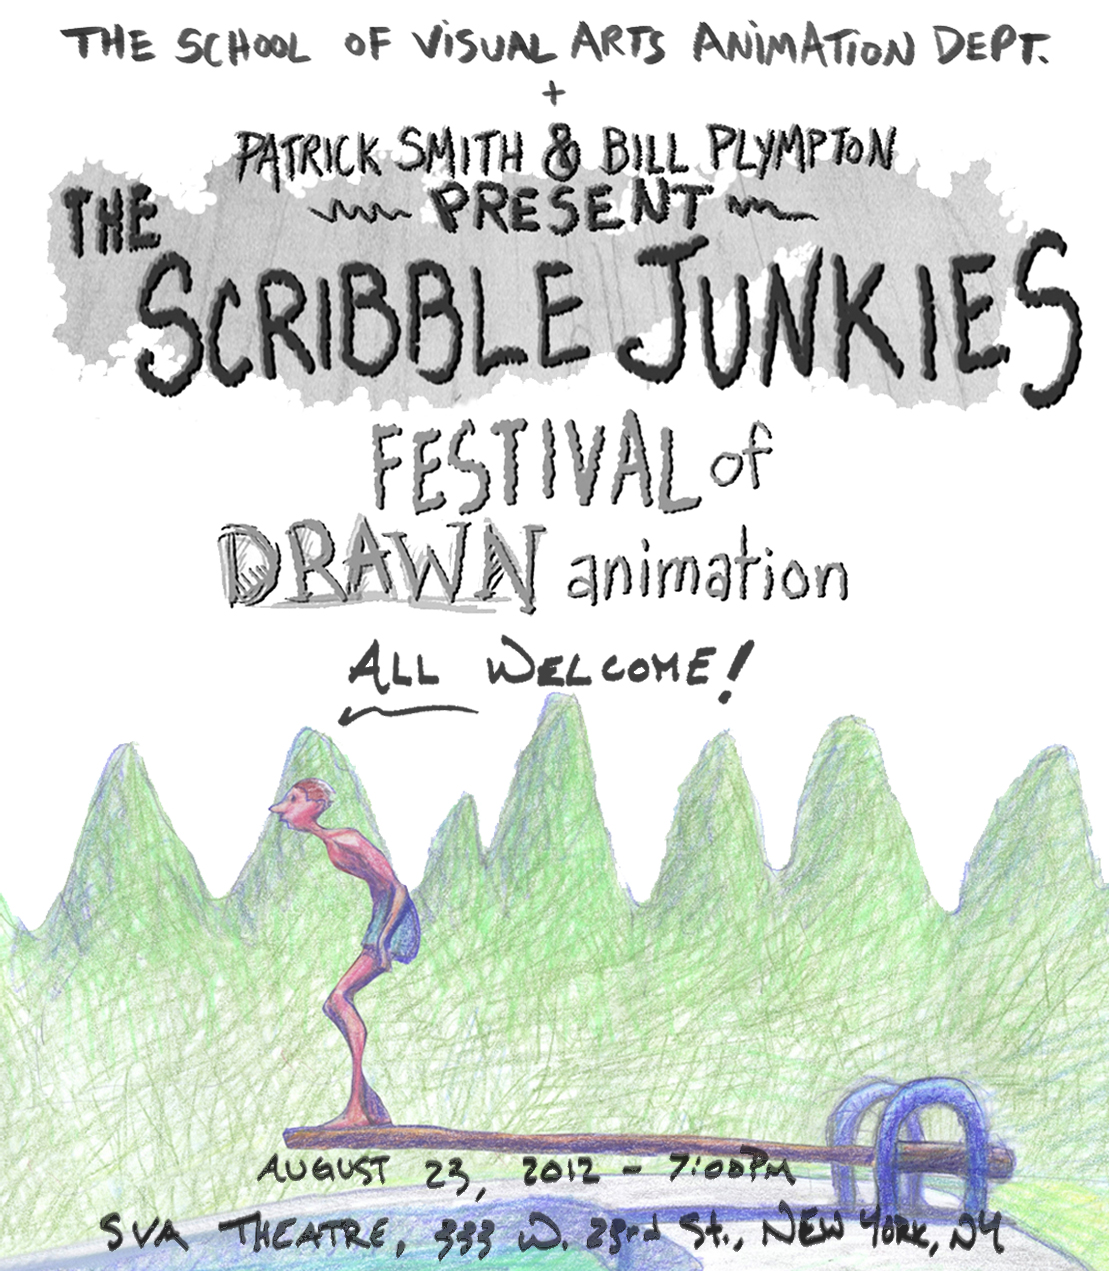 SVA presents Scribble Junkies Festival of Drawn Animation